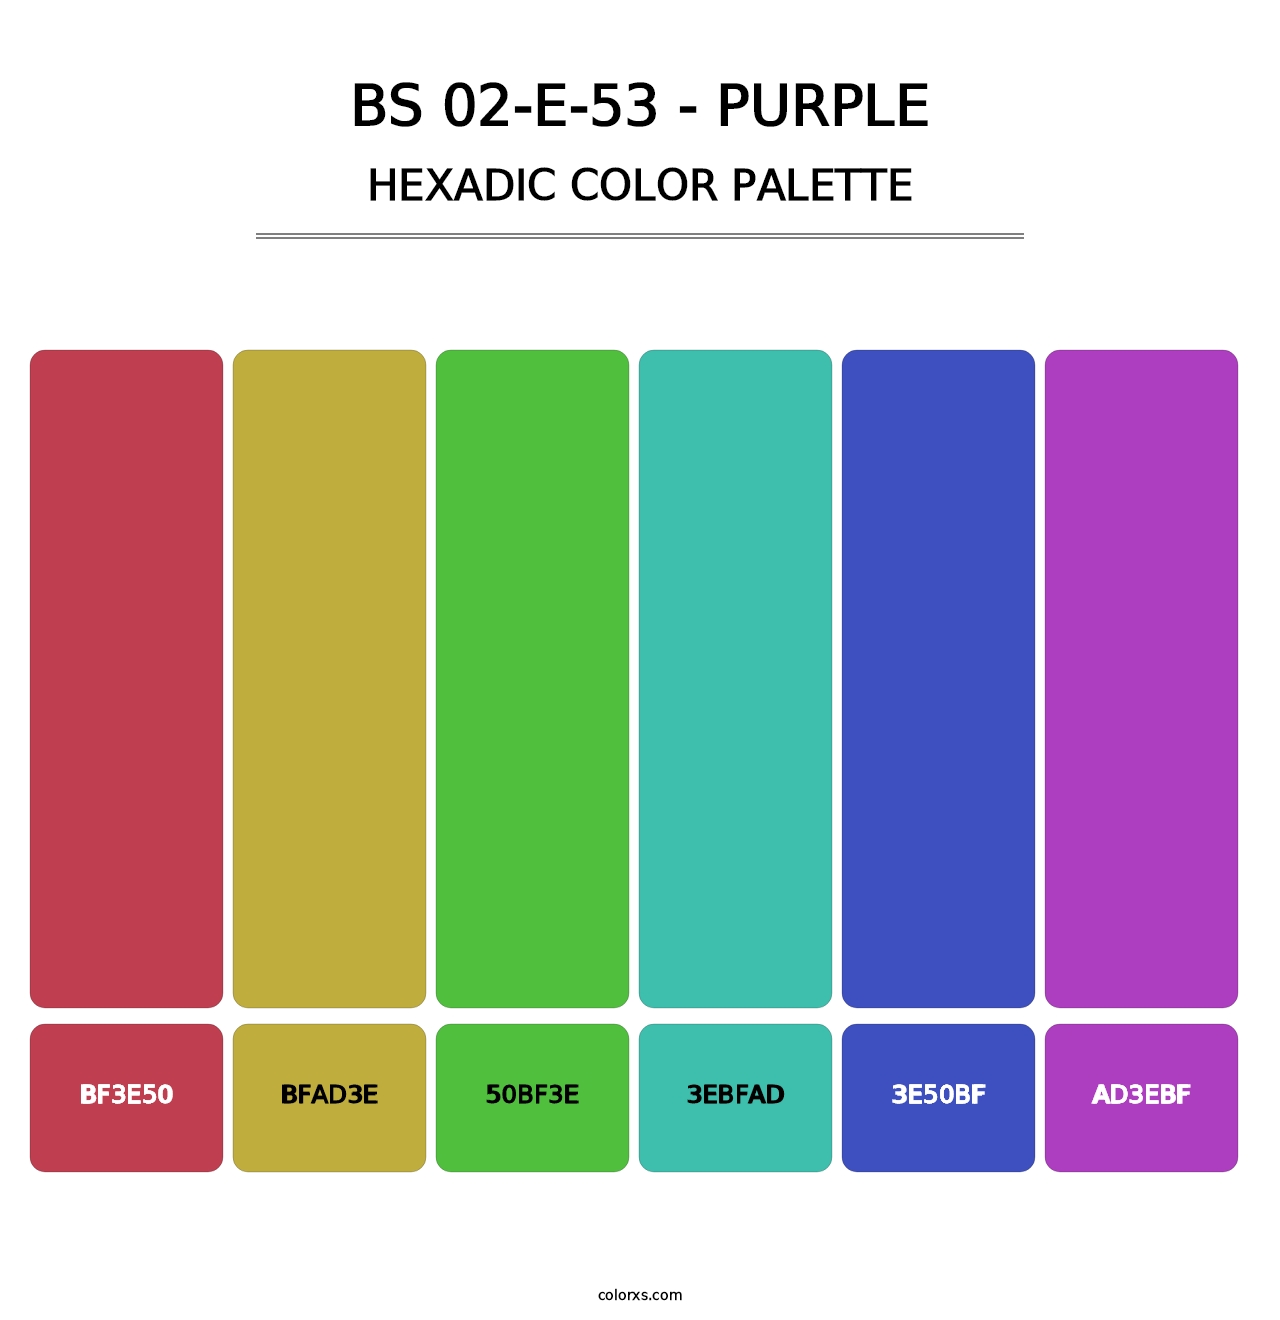 BS 02-E-53 - Purple - Hexadic Color Palette